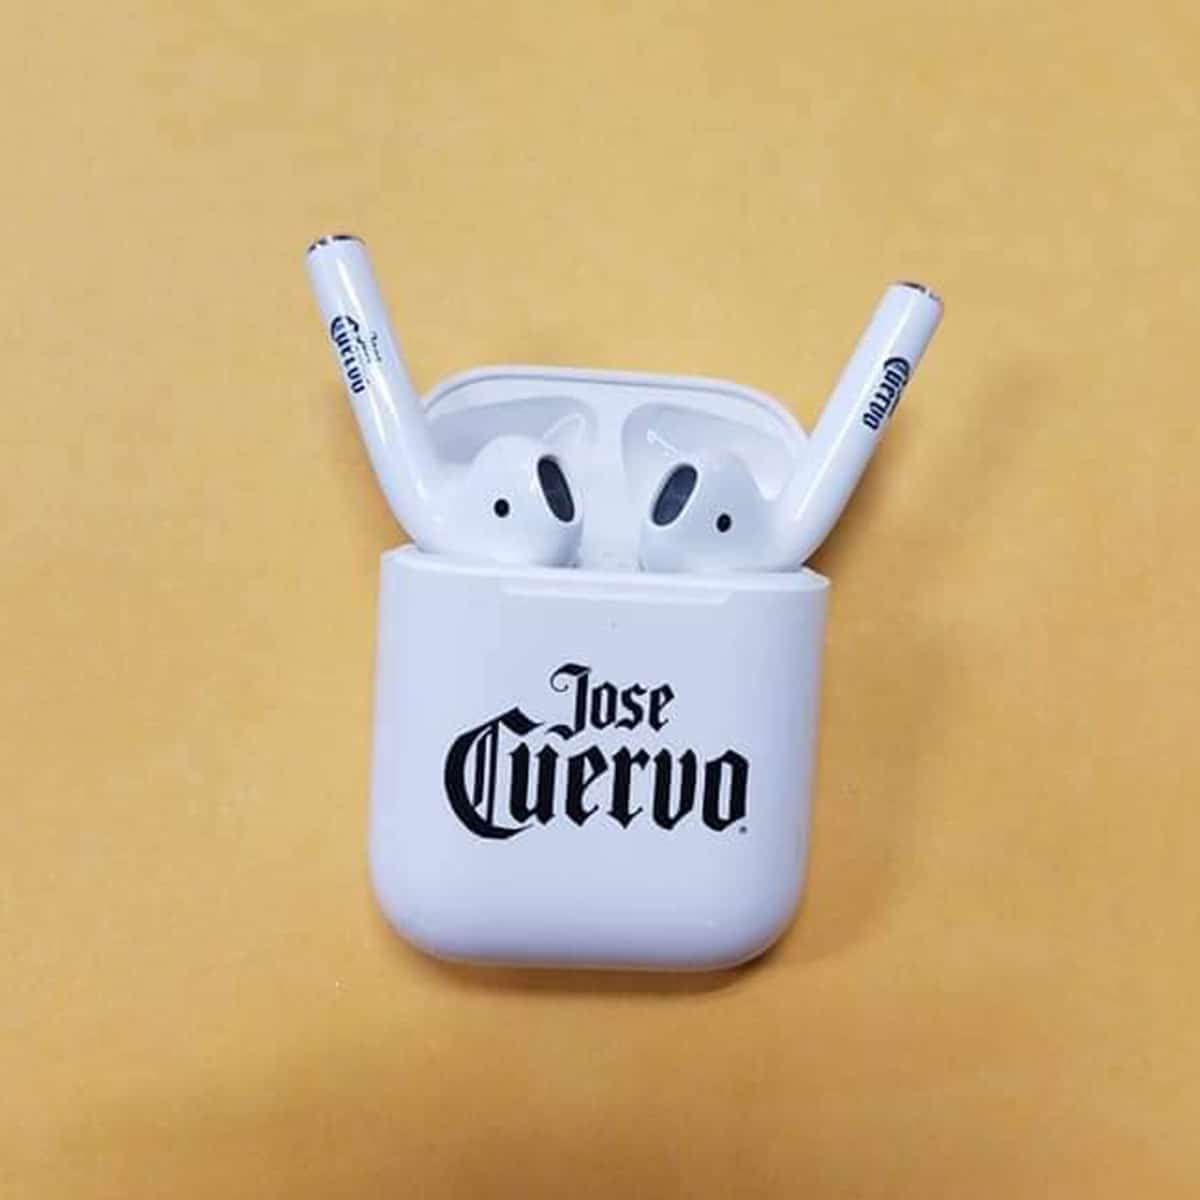 Jose Cuervo Branded Airpods